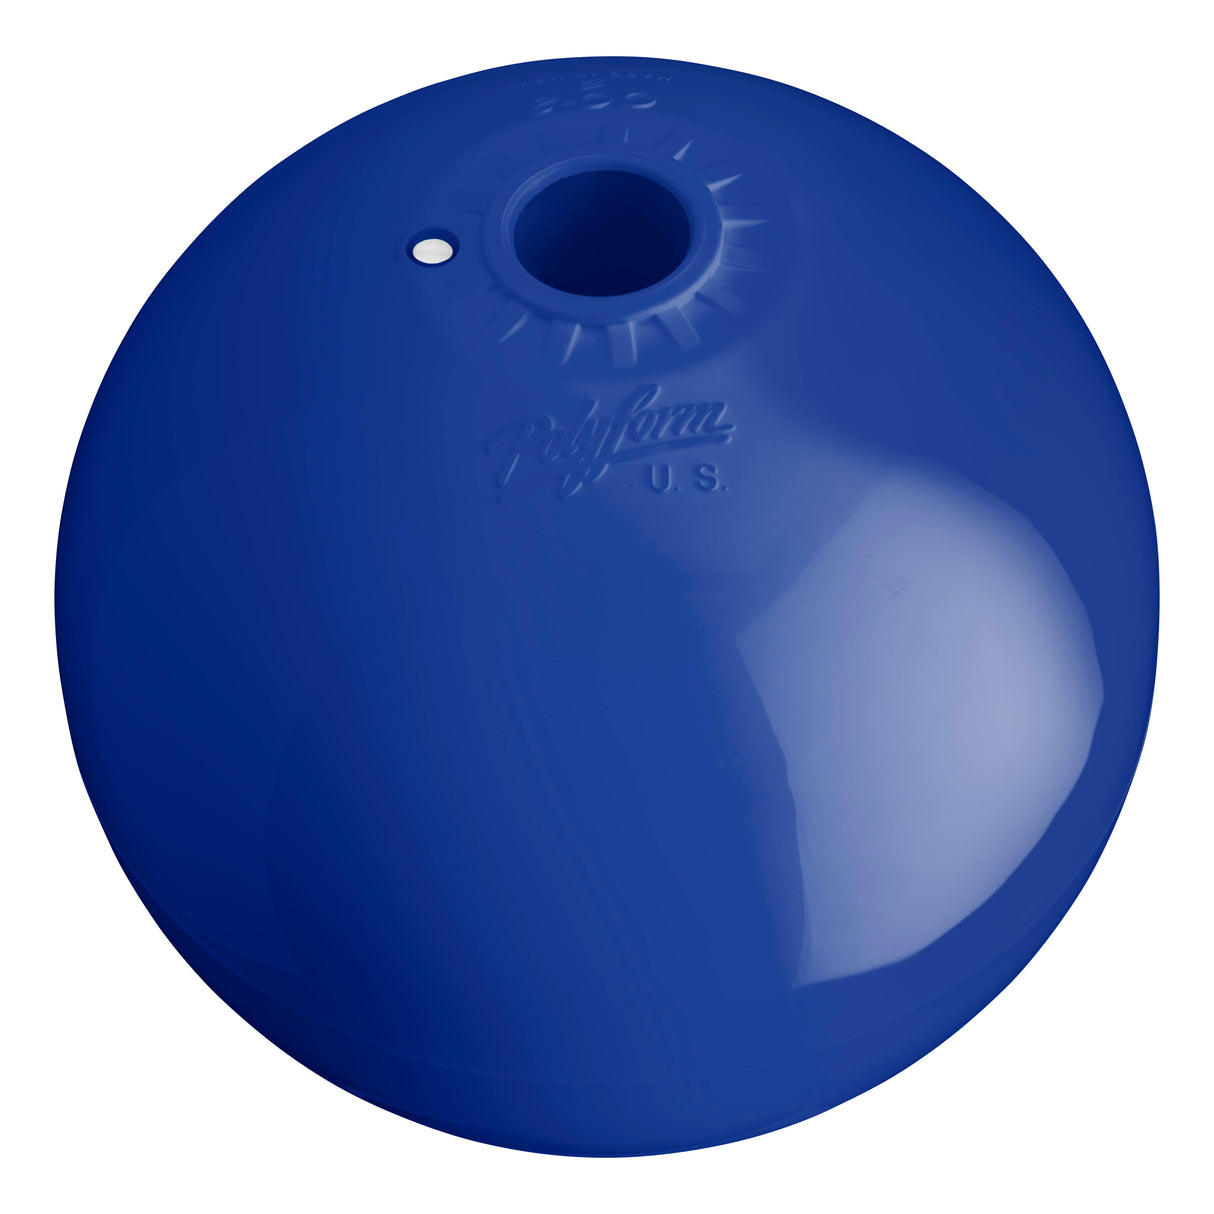 Hole through center mooring and marker buoy, Polyform CC-6 Cobalt Blue angled shot